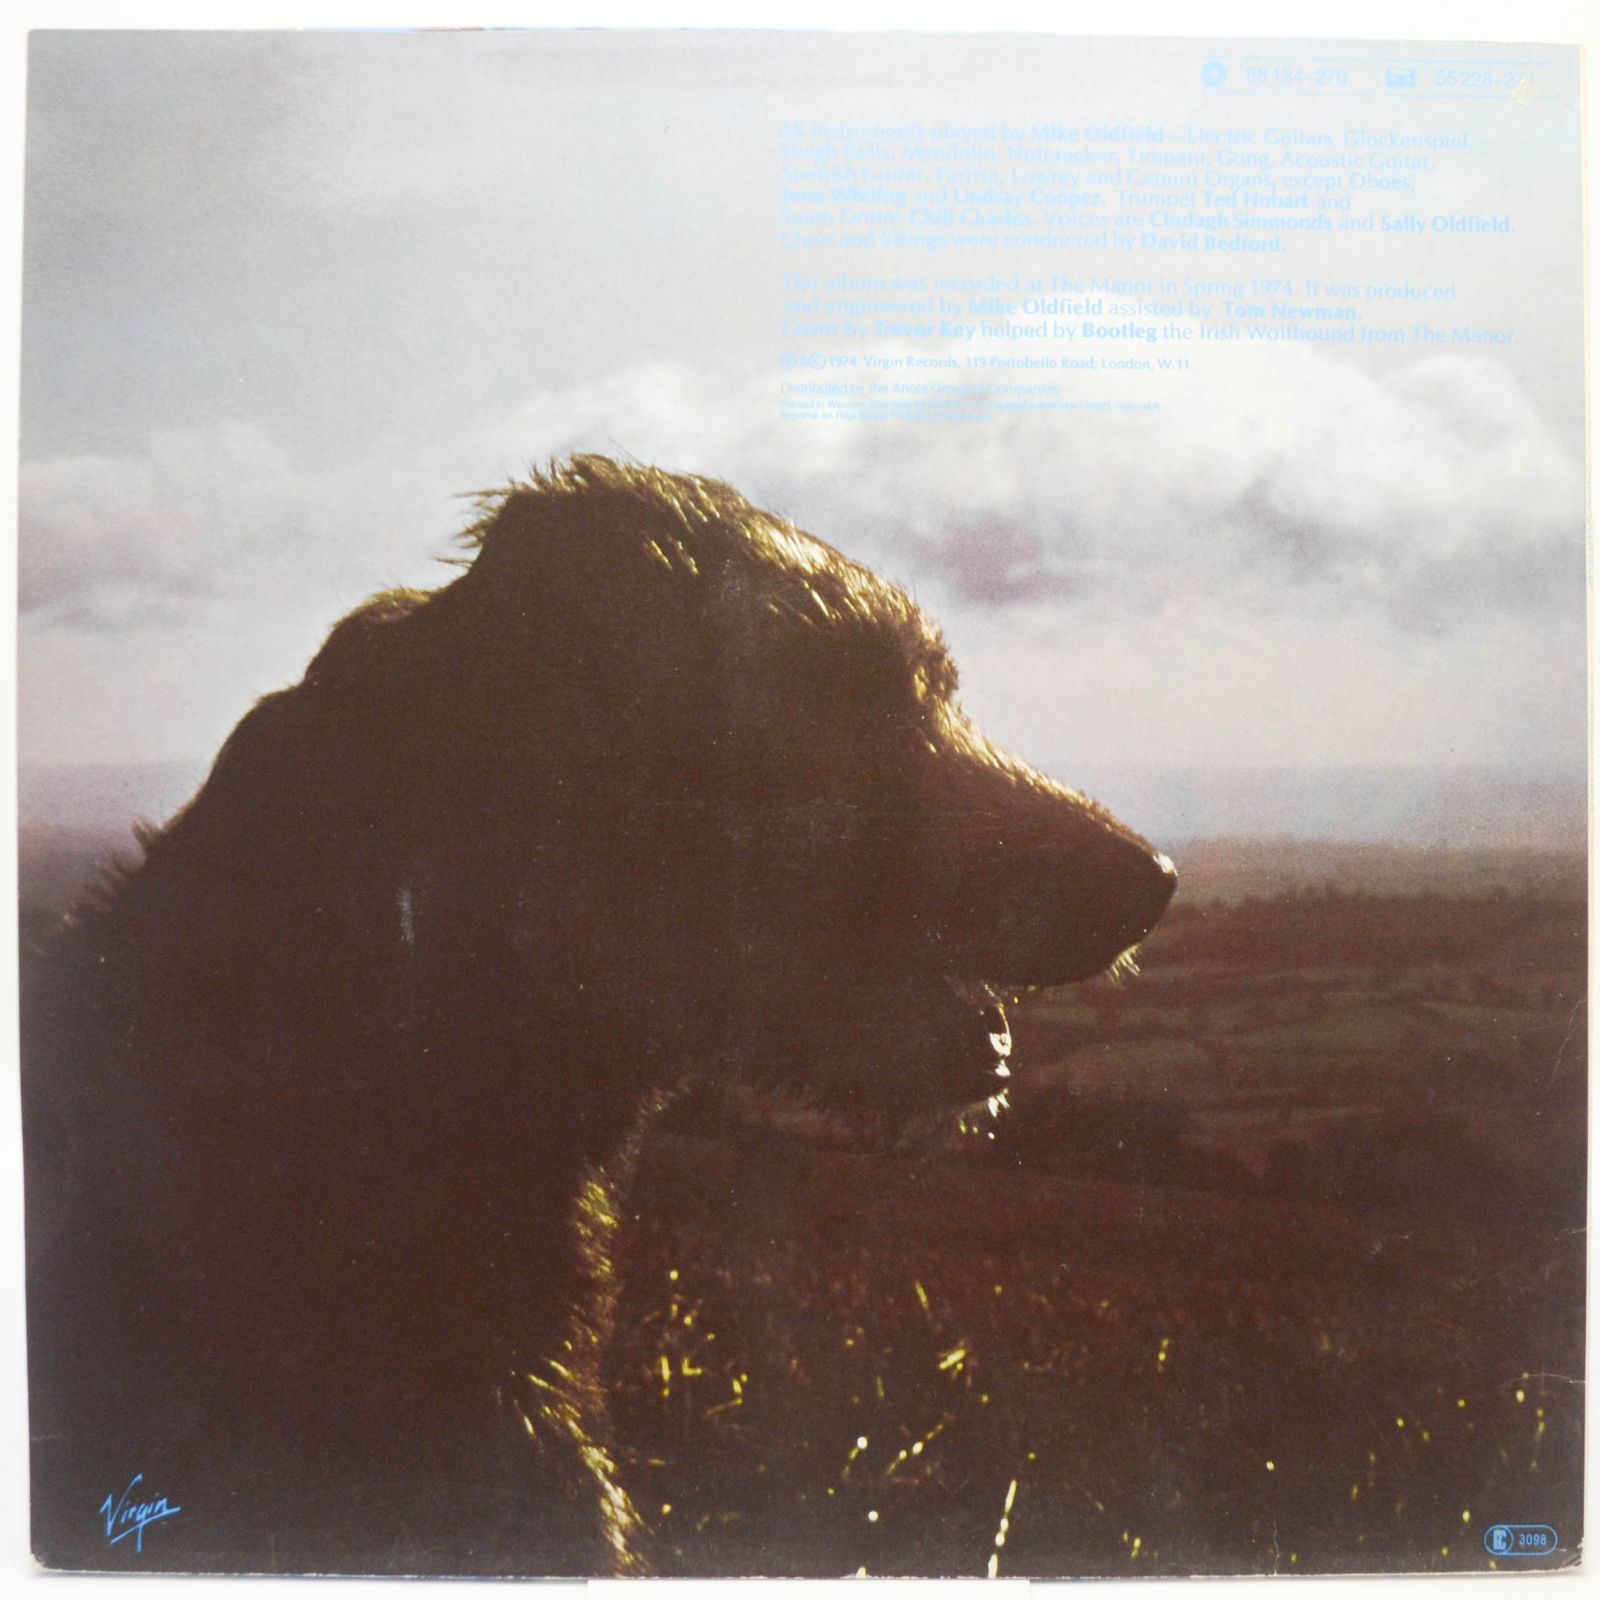 Mike Oldfield — Hergest Ridge, 1974